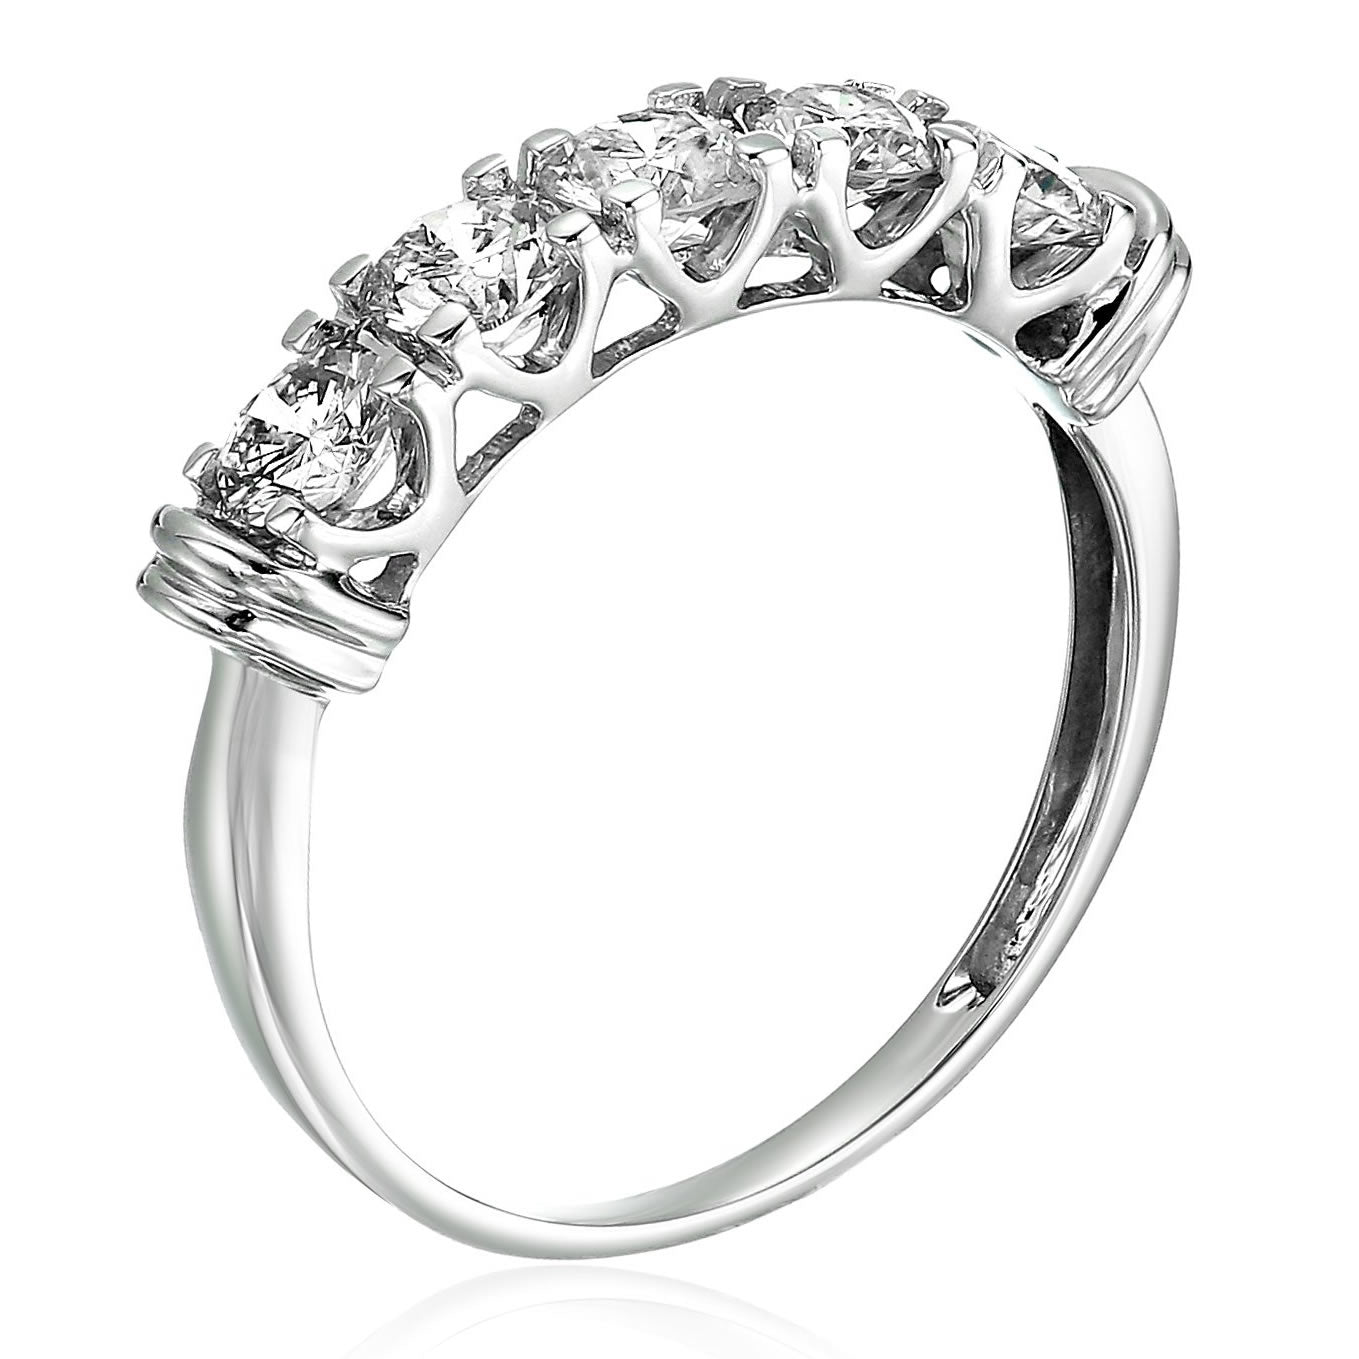 1 cttw Certified I1-I2 5 Stone Diamond Ring 14K White Gold Engagement